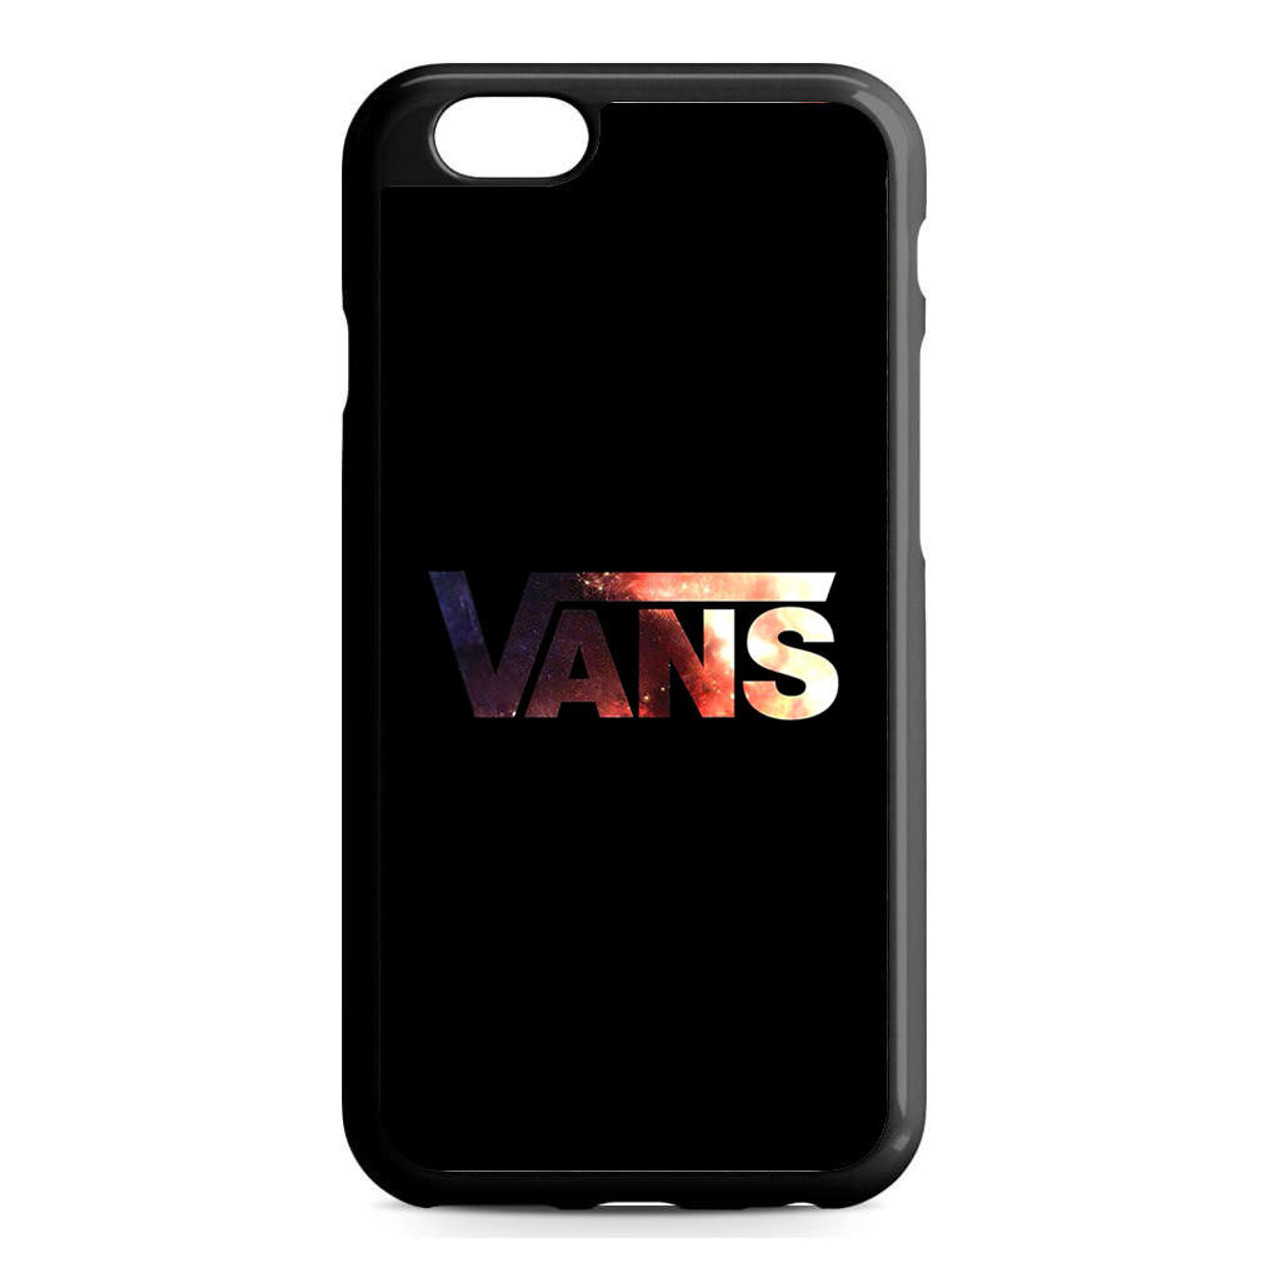 vans phone case iphone 6s